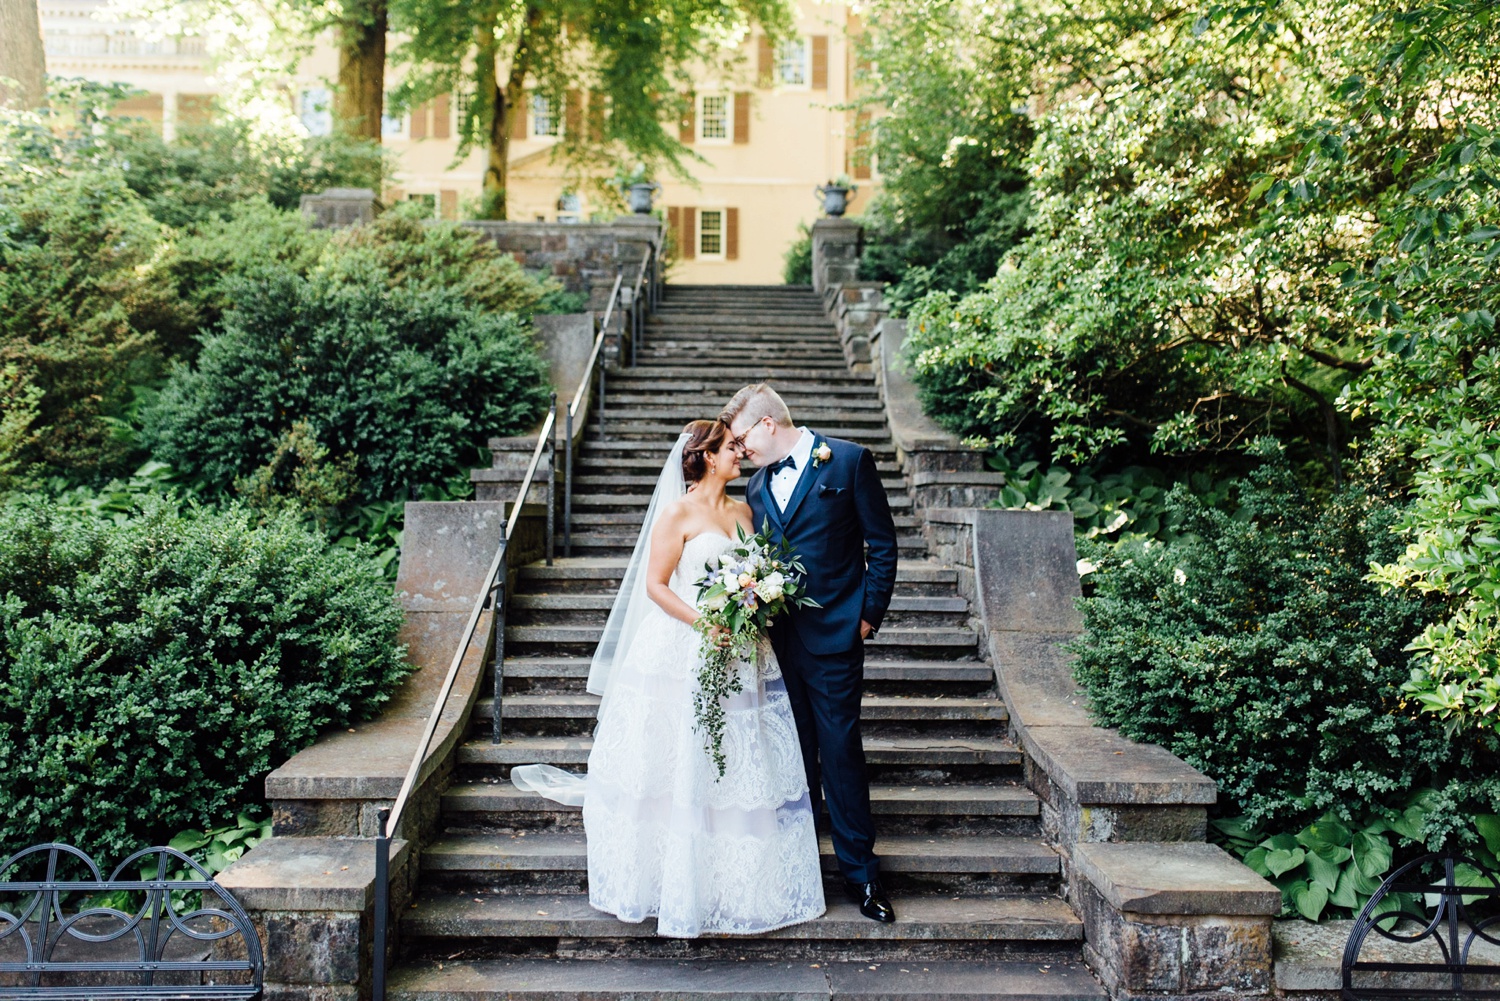 Colleen + Matt - Winterthur Wedding - Delaware Wedding Photographer - Alison Dunn Photography photo